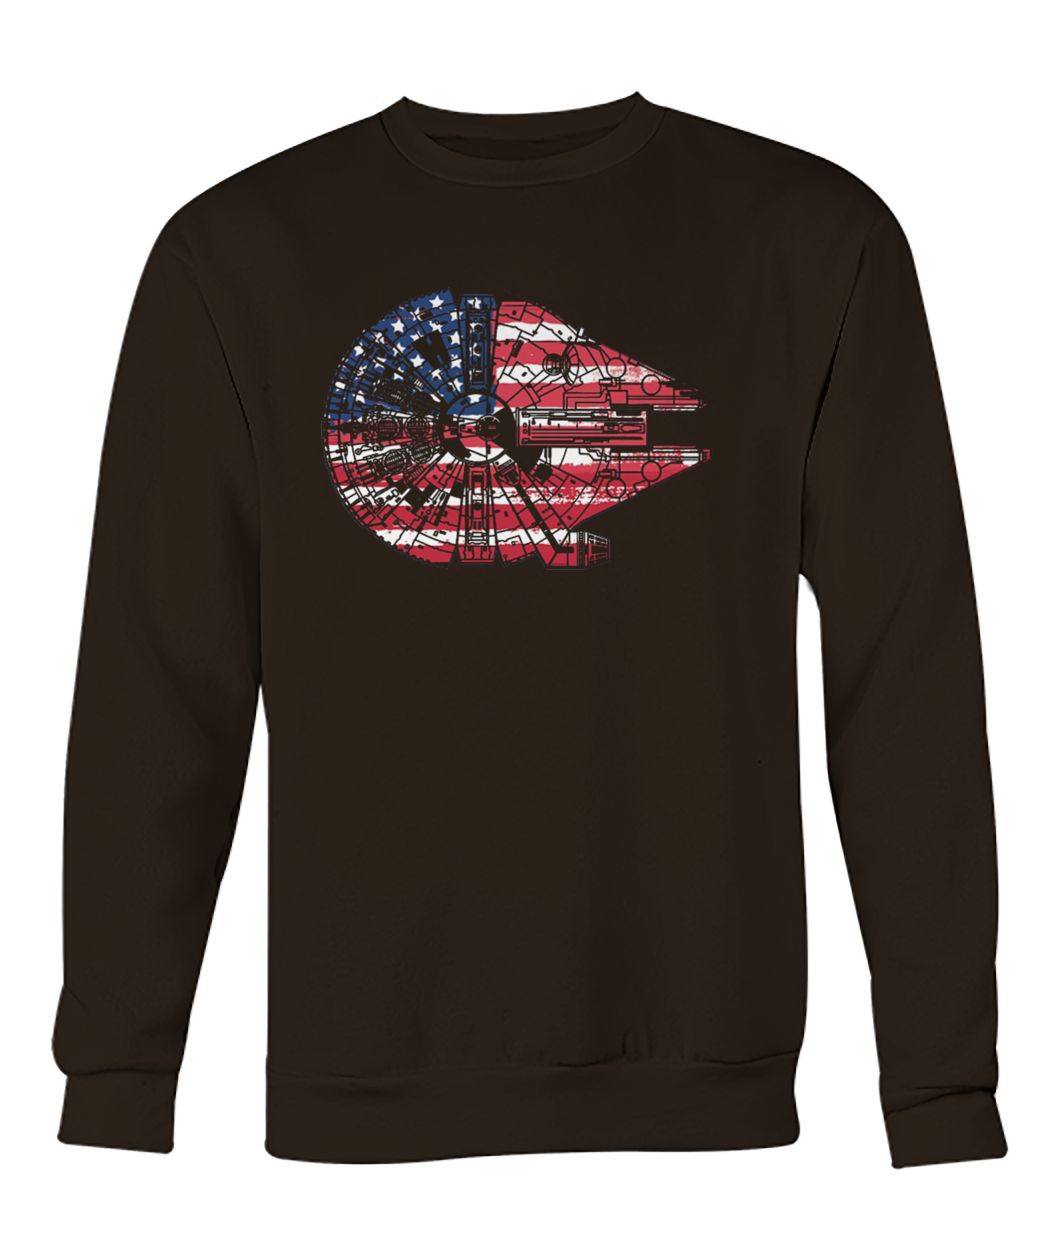 Star wars millennium falcon united states flag crew neck sweatshirt